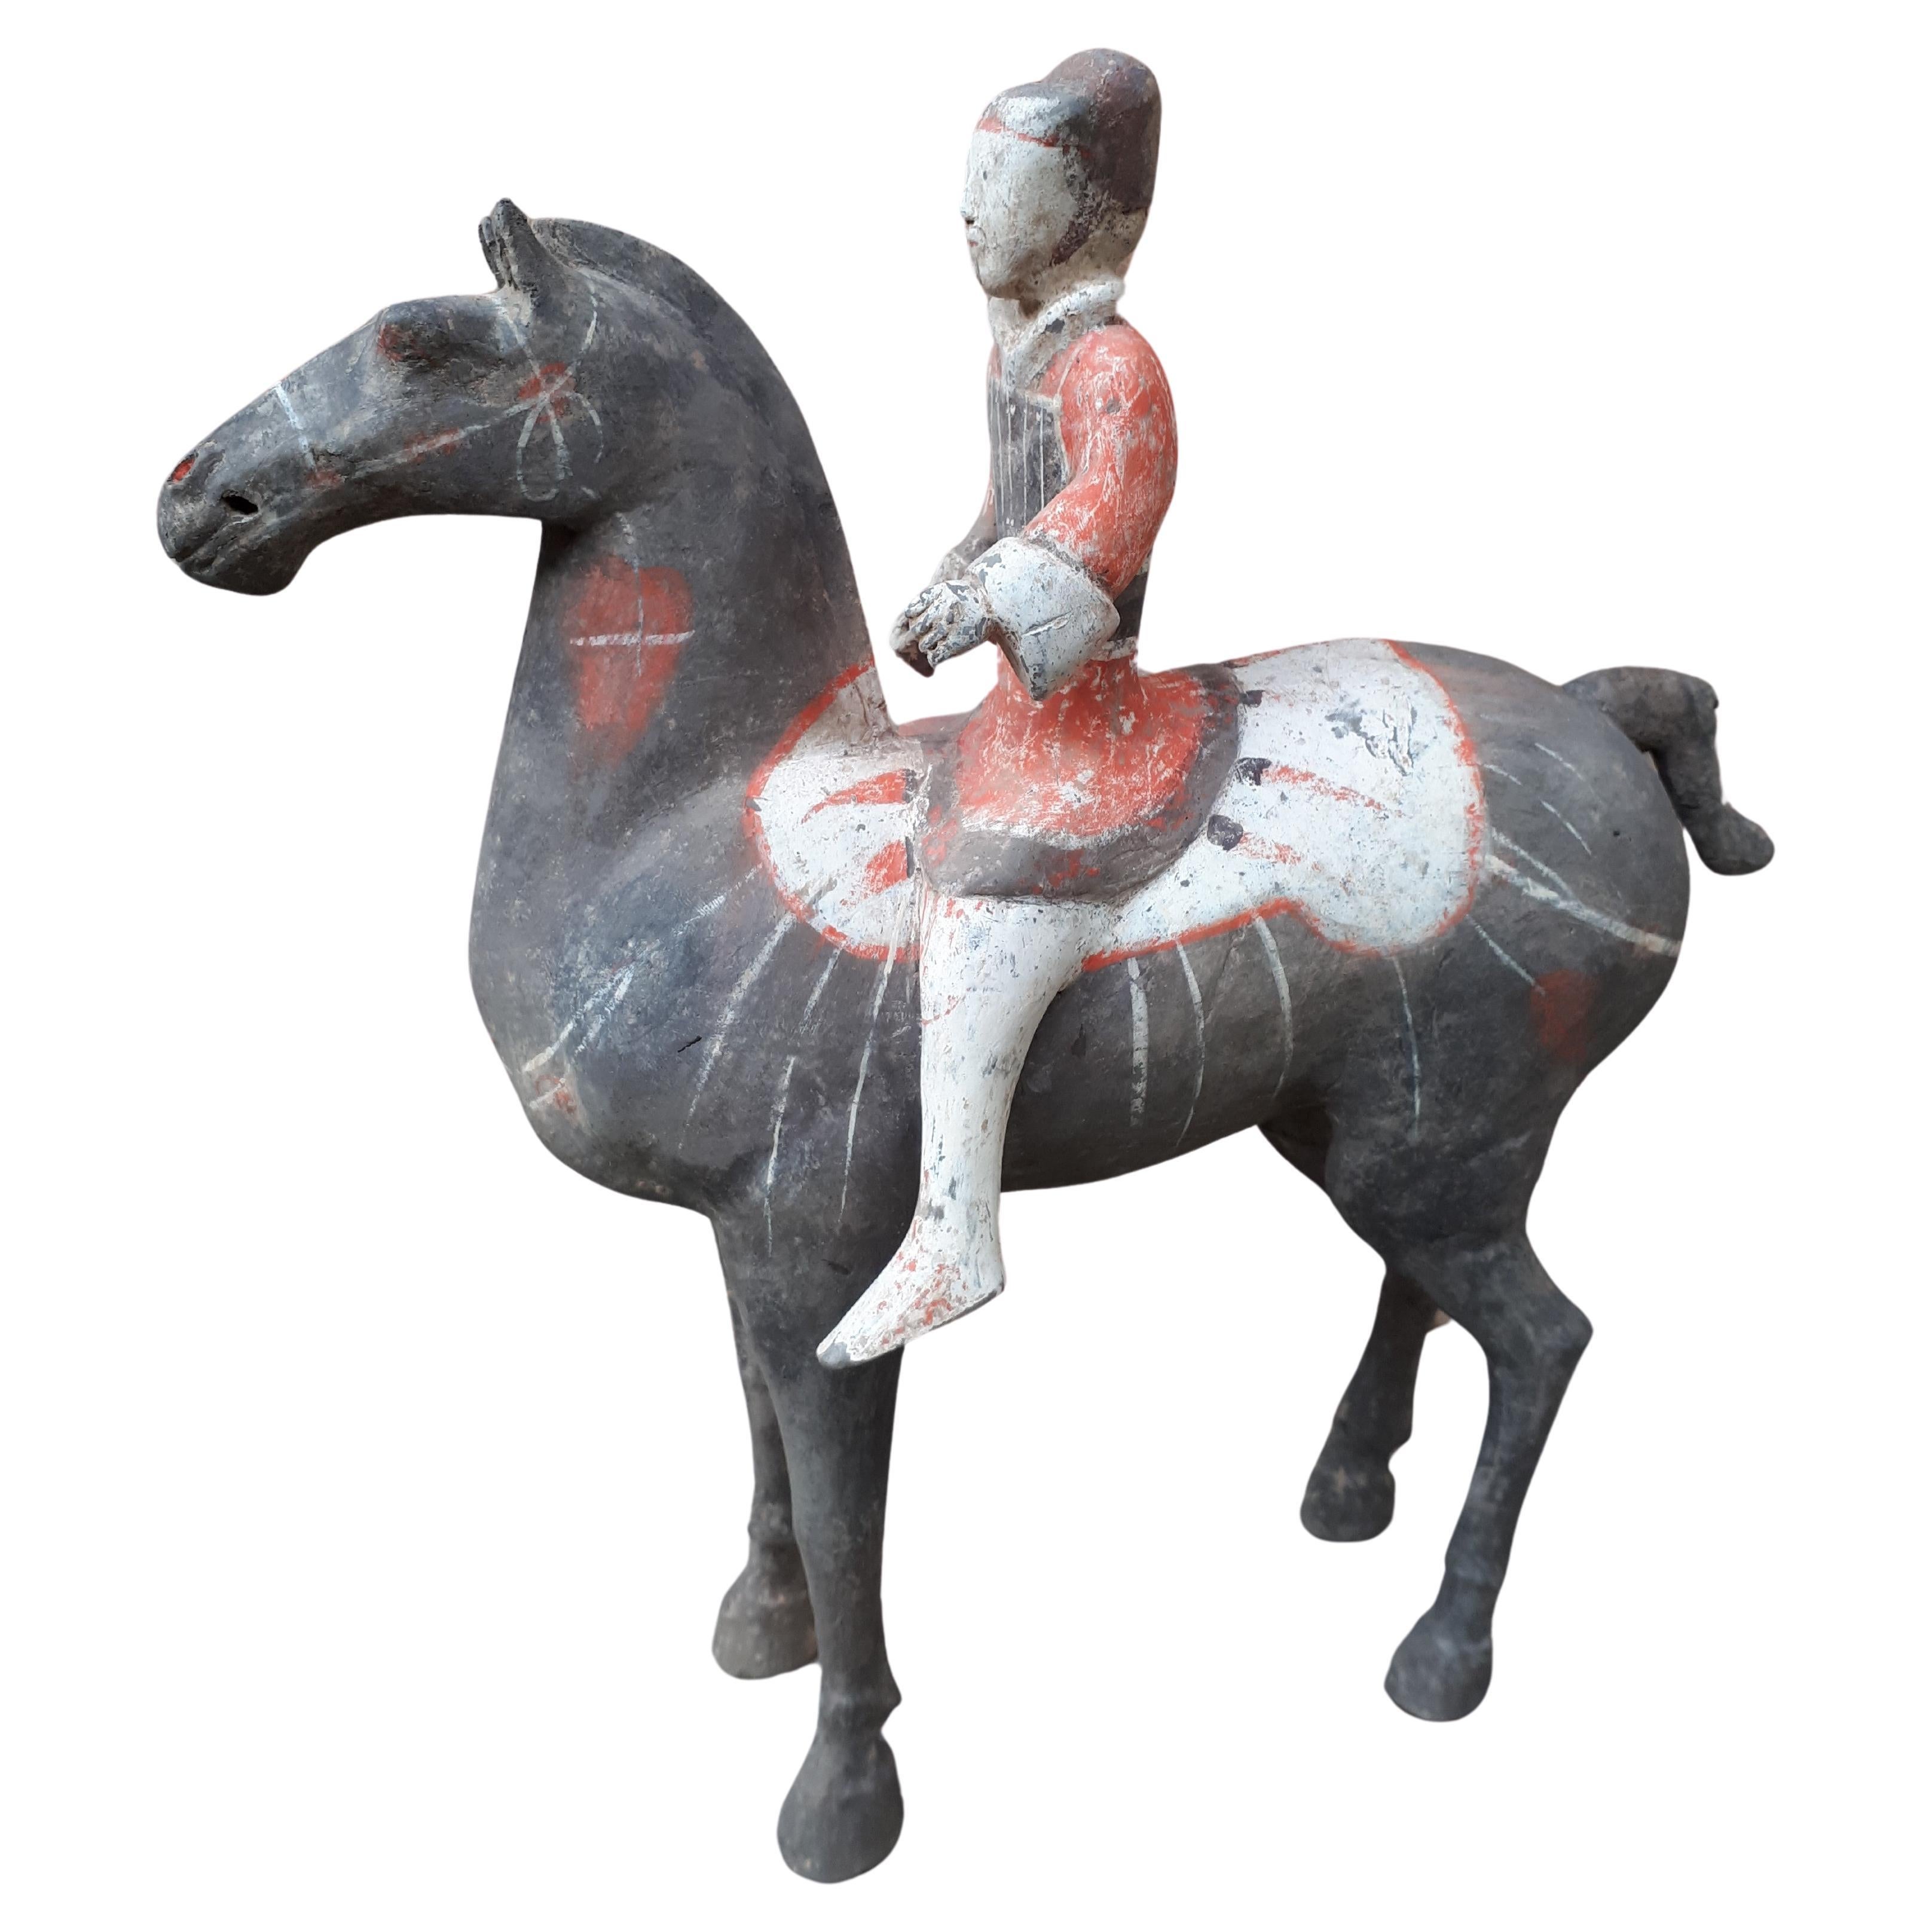 Chinese Terracotta Sculpture Representing A Horseman, China Han Dynasty